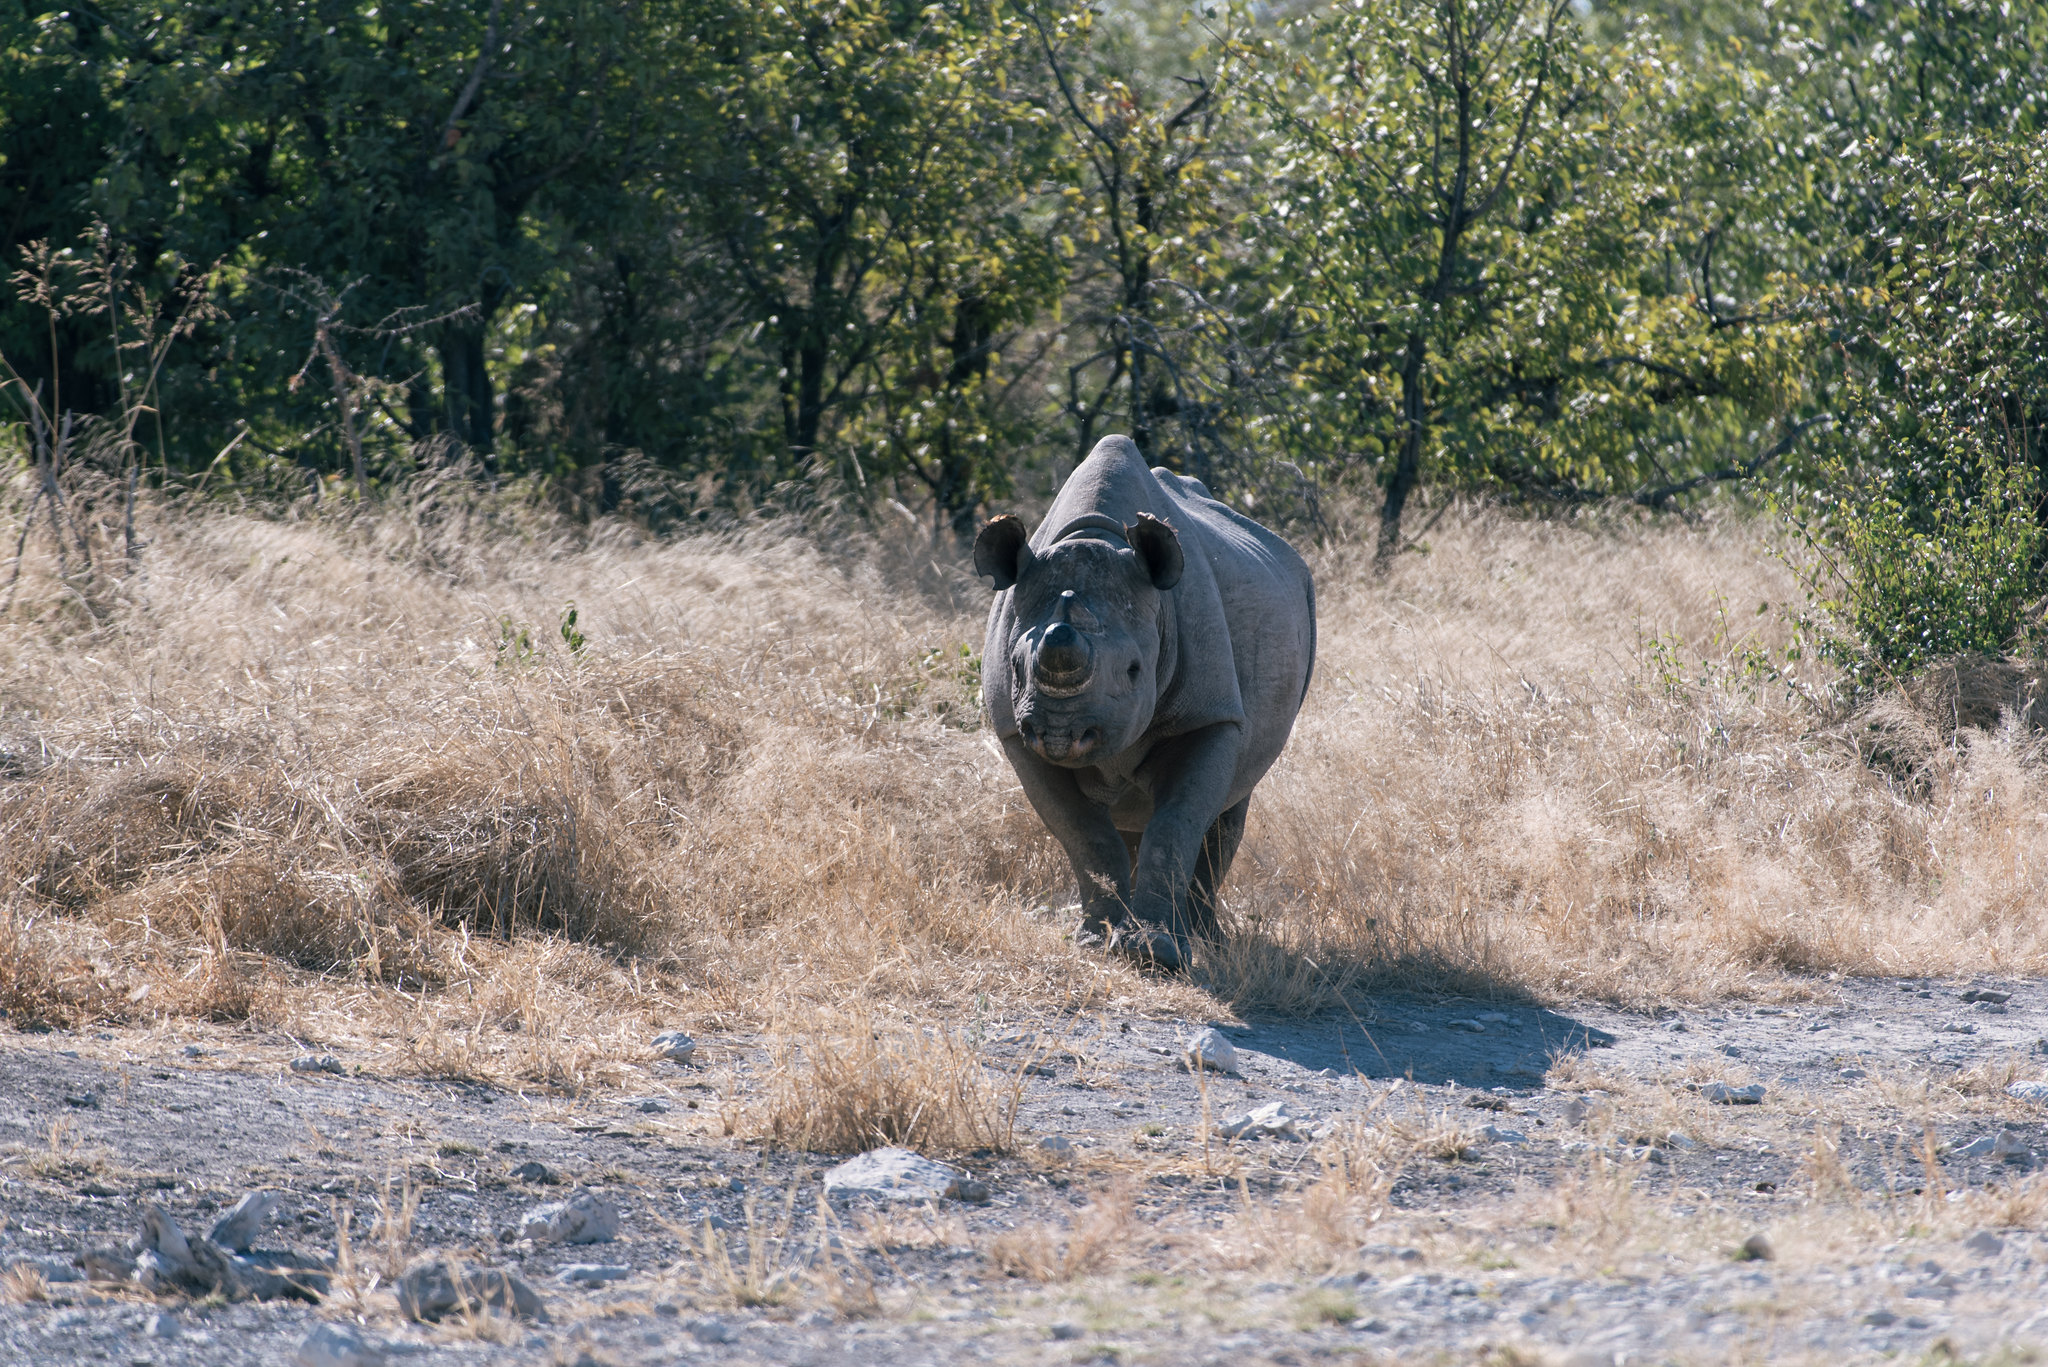 Walking rhino